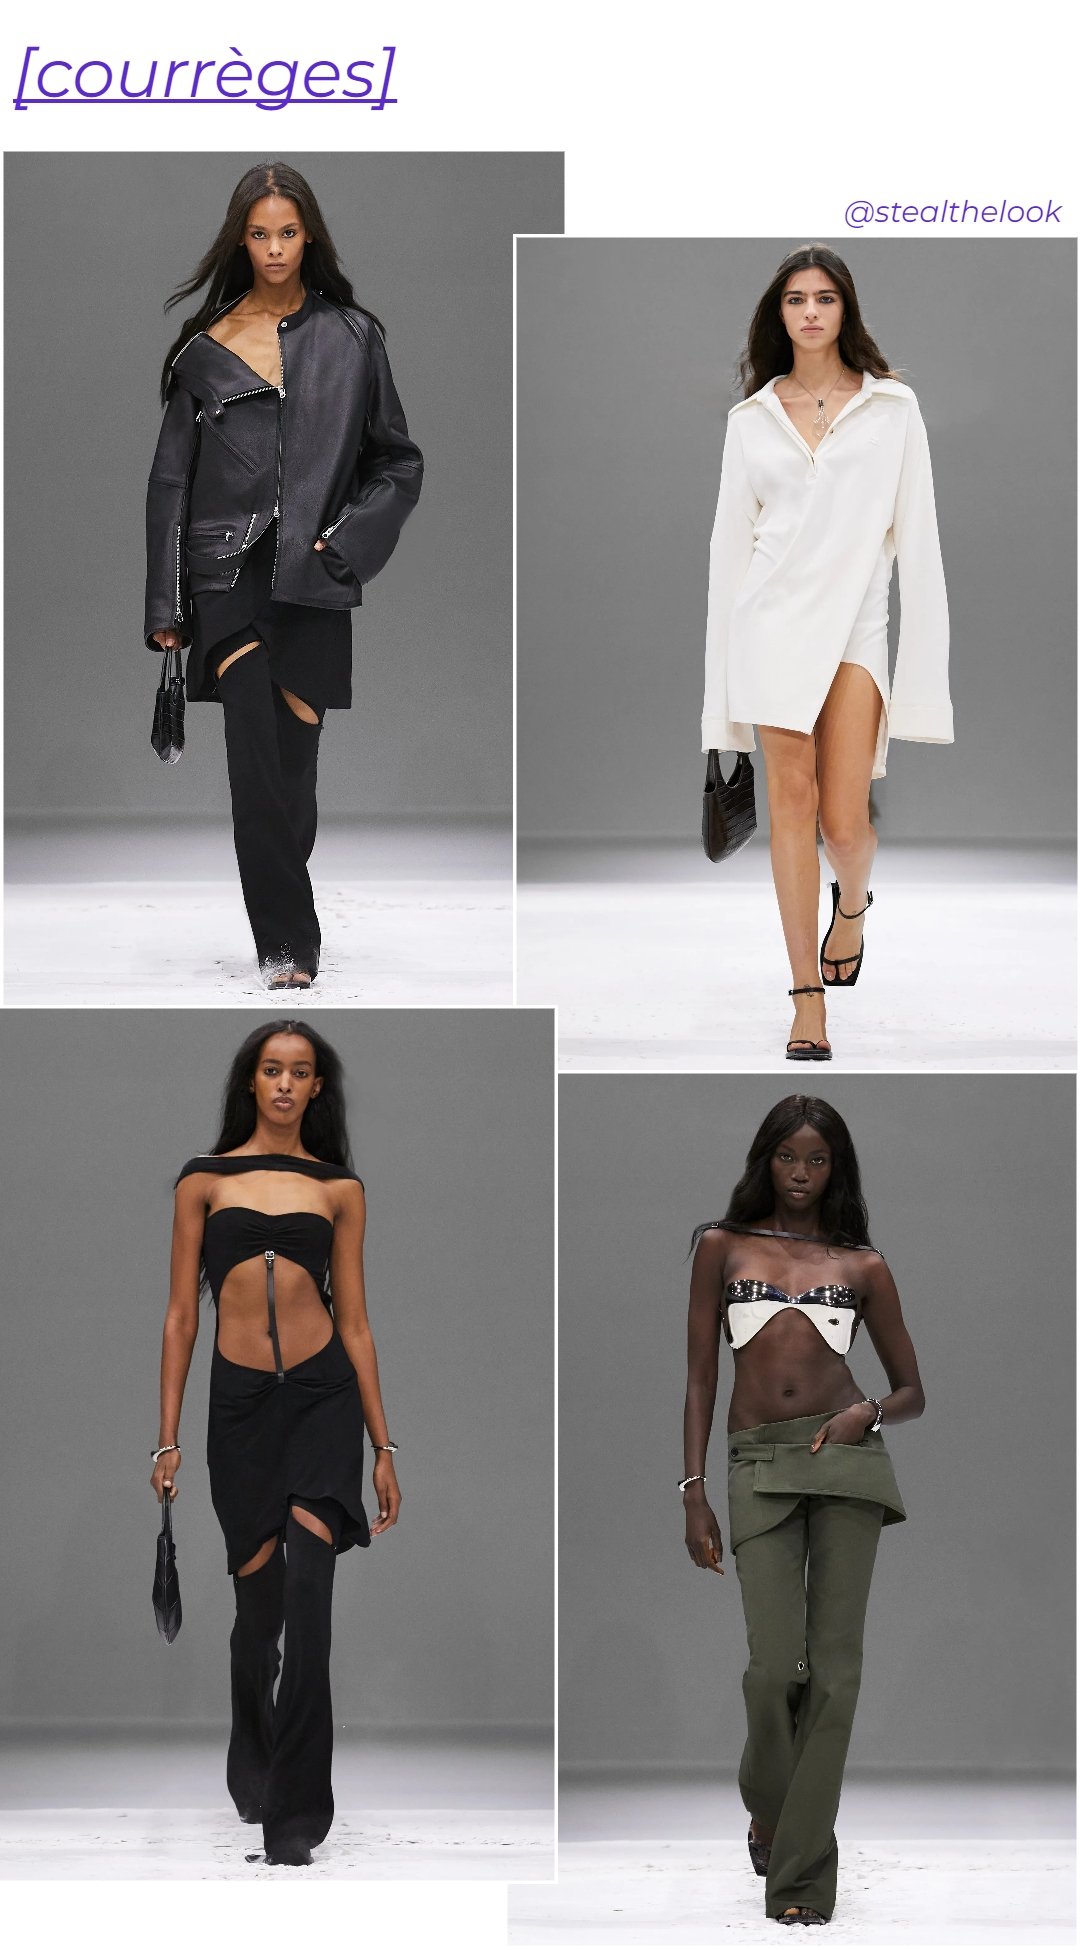 Courrèges - roupas diversas - Paris Fashion Week - verão - colagem de imagens - https://stealthelook.com.br